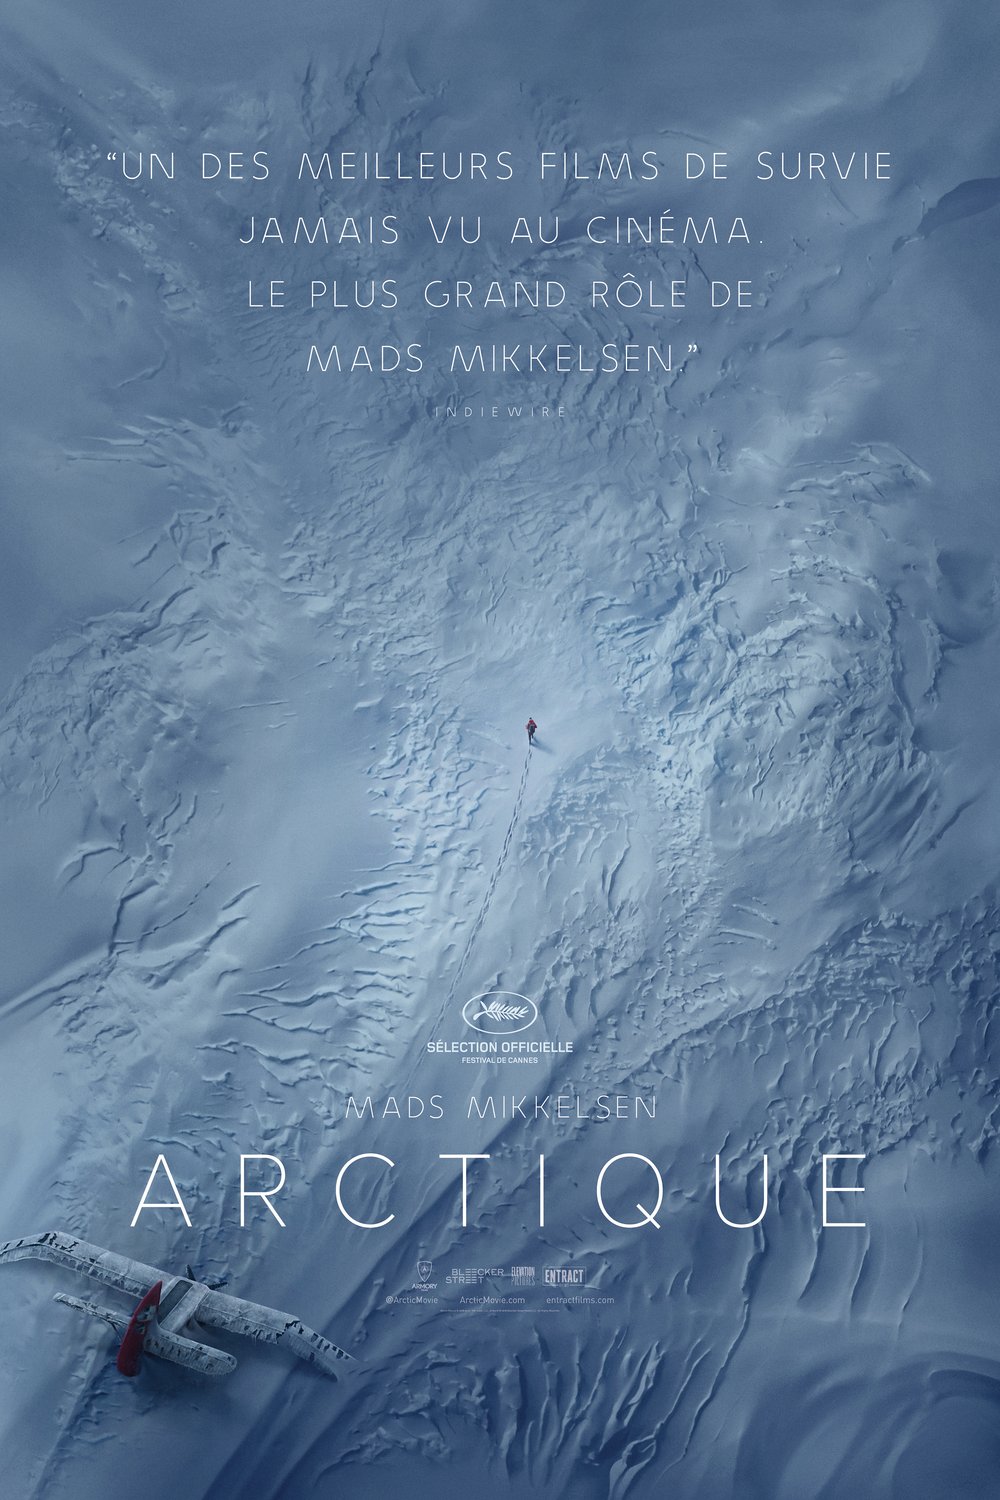 L'affiche du film Arctique v.f.